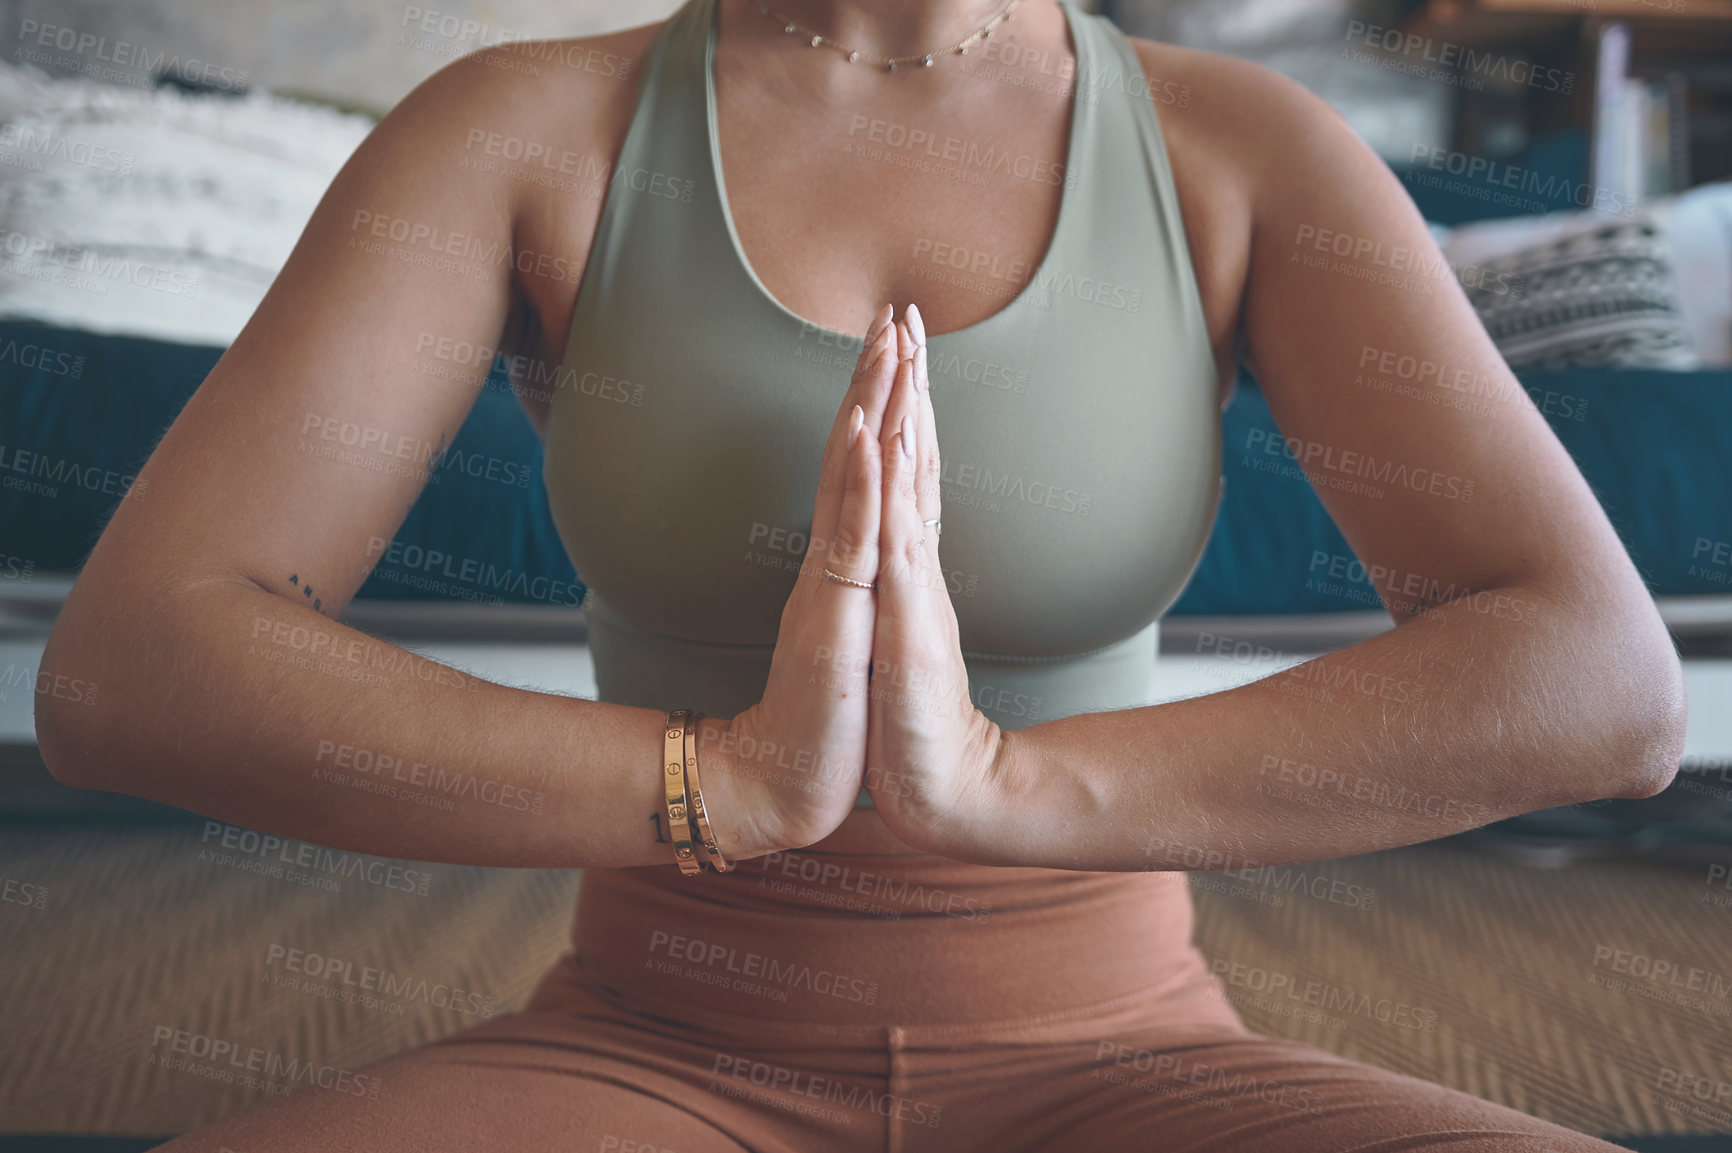 Buy stock photo Closeup shot of a woman meditating while practising yoga at home